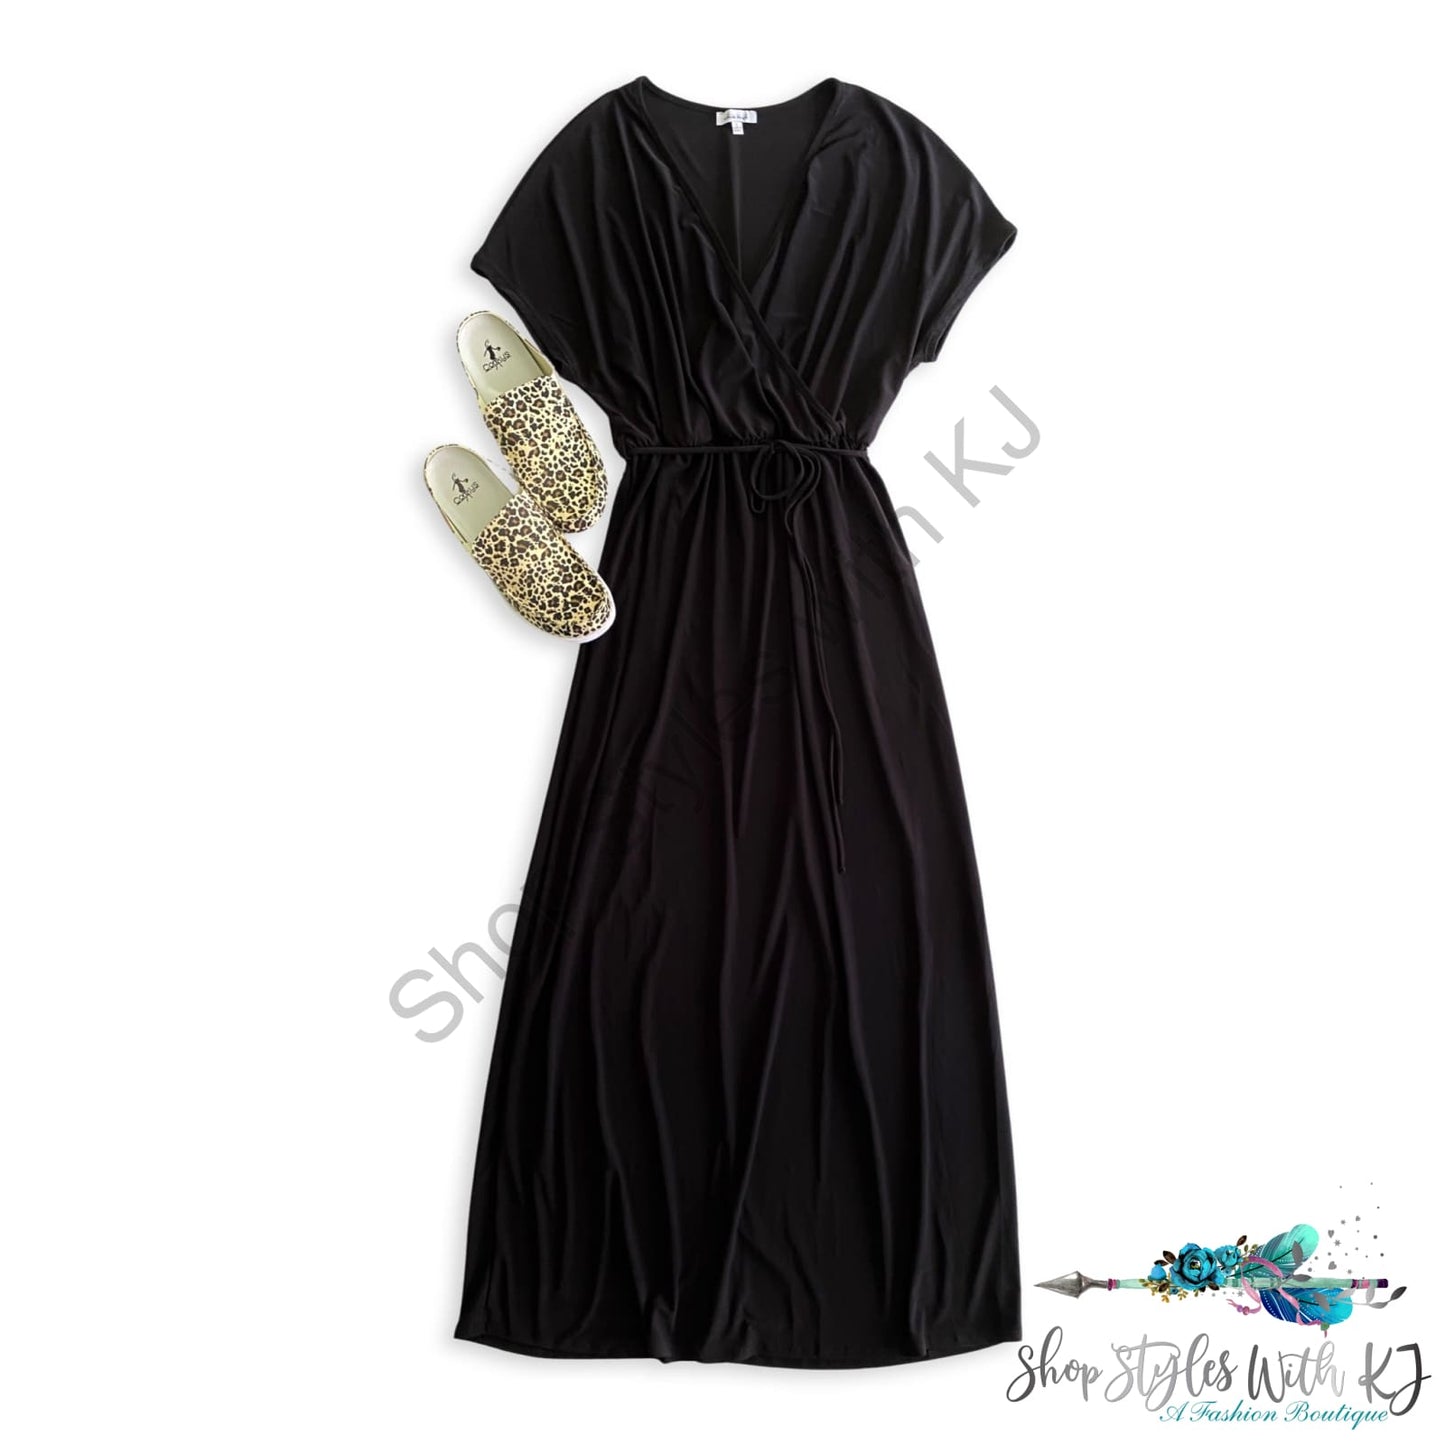 Be Majestic Dress In Black White Birch